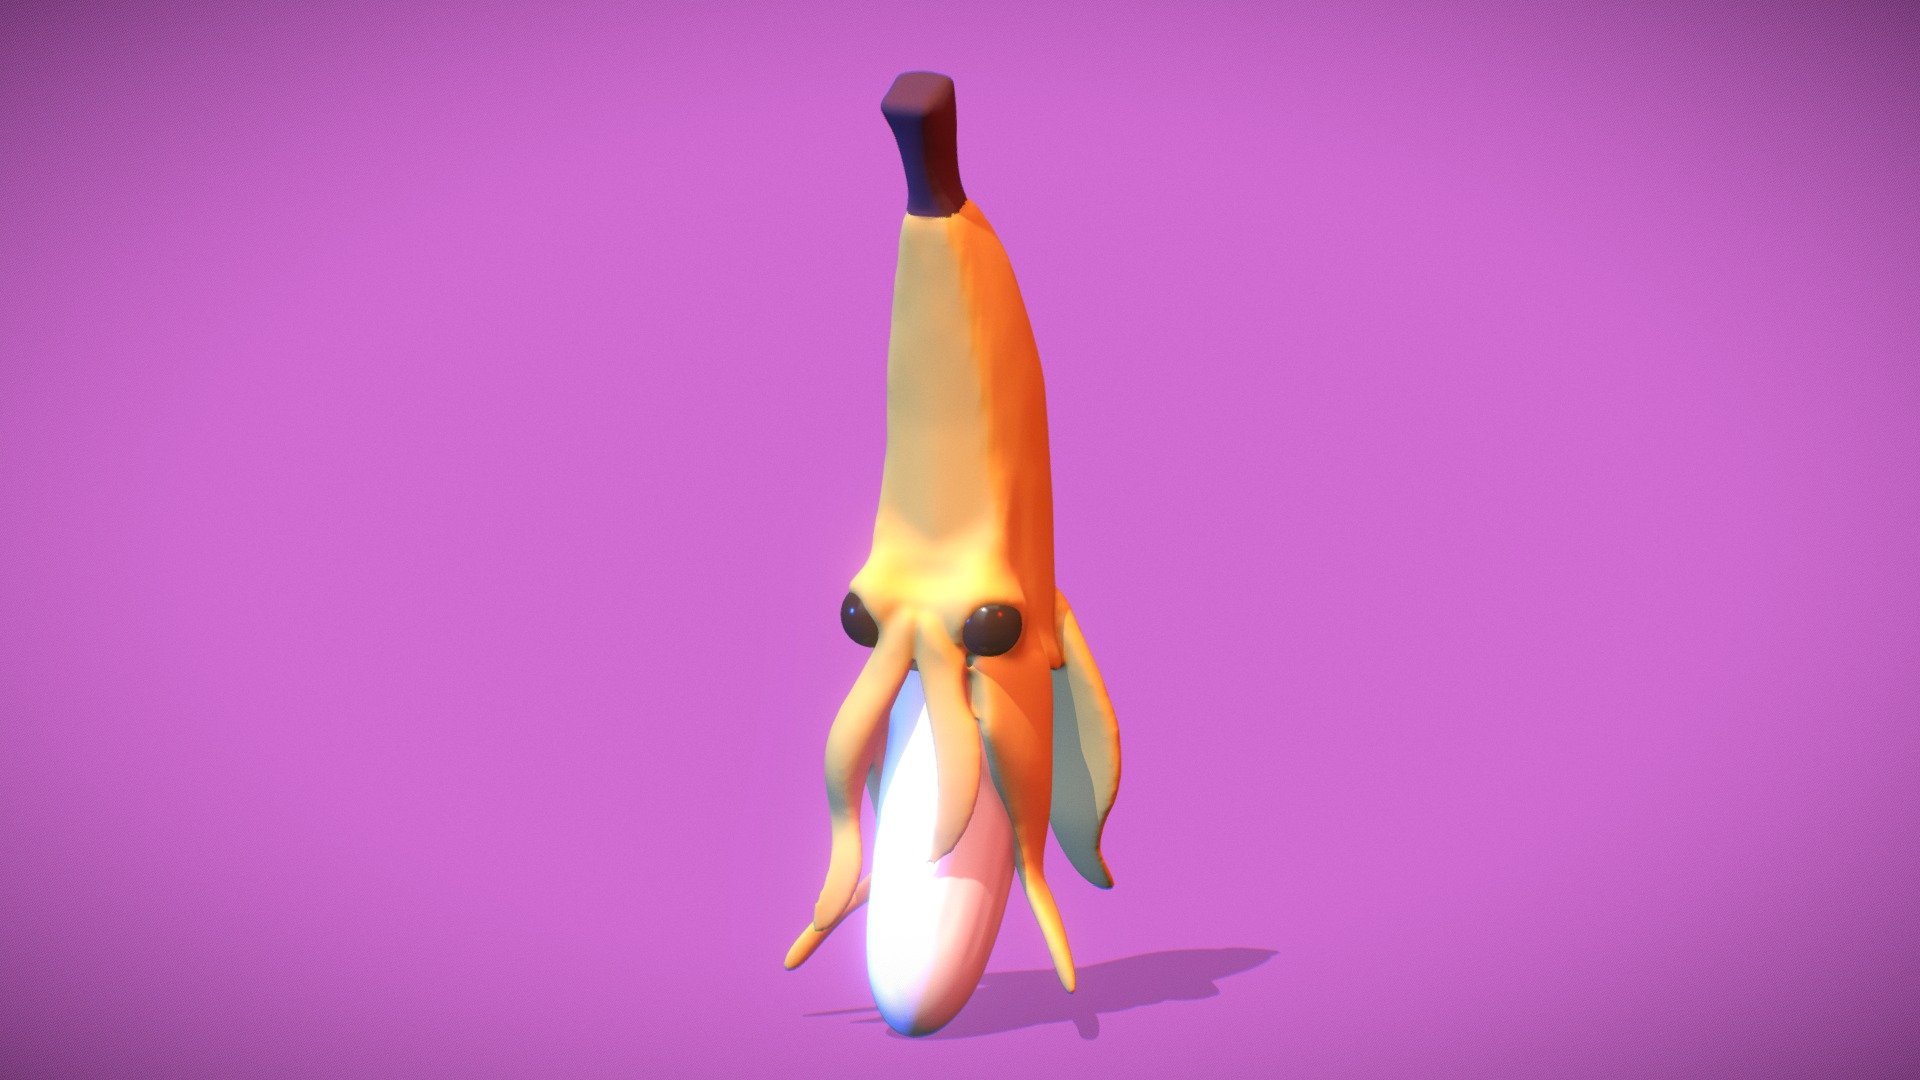 Banana Sculpt
(Blender)

Follow Me: https://www.instagram.com/magicwendric/ - Banana - 3D model by magicwendric 3d model